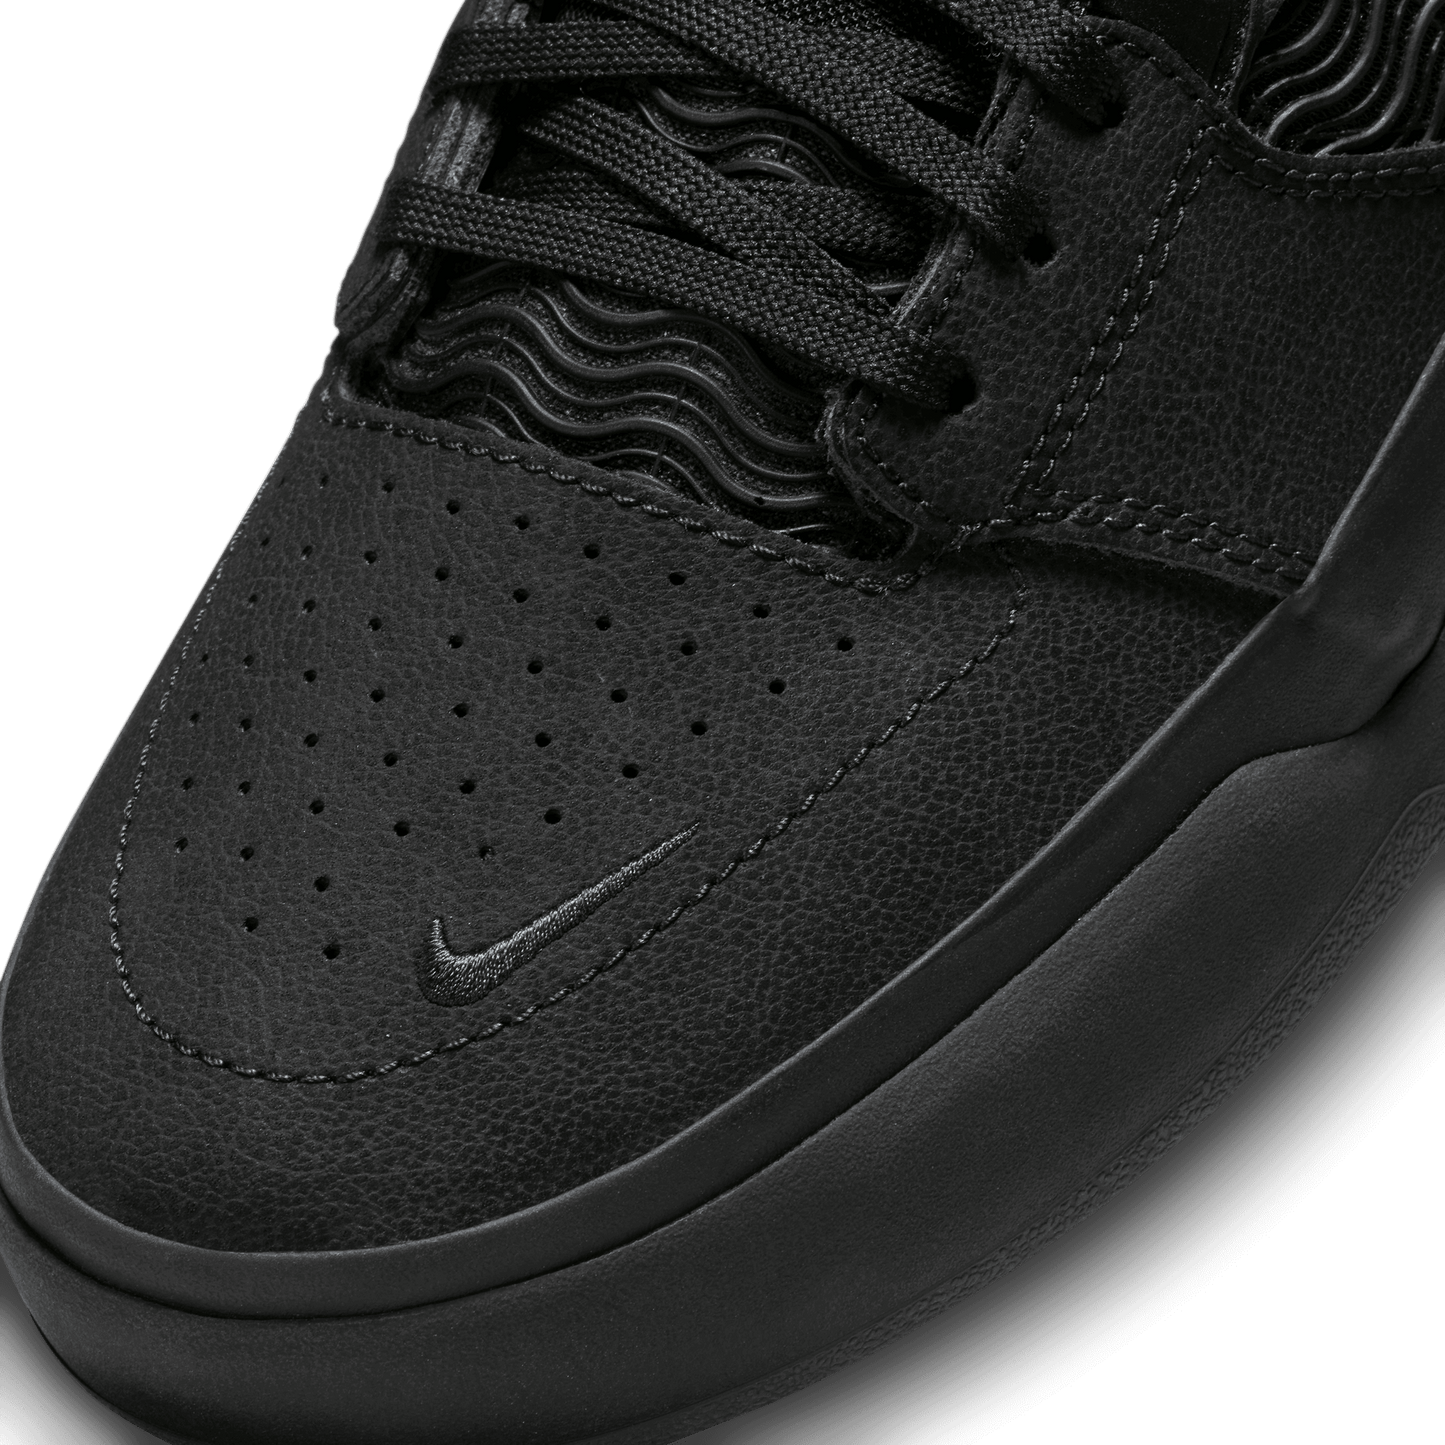 Nike SB Ishod Wair Premium black black black black